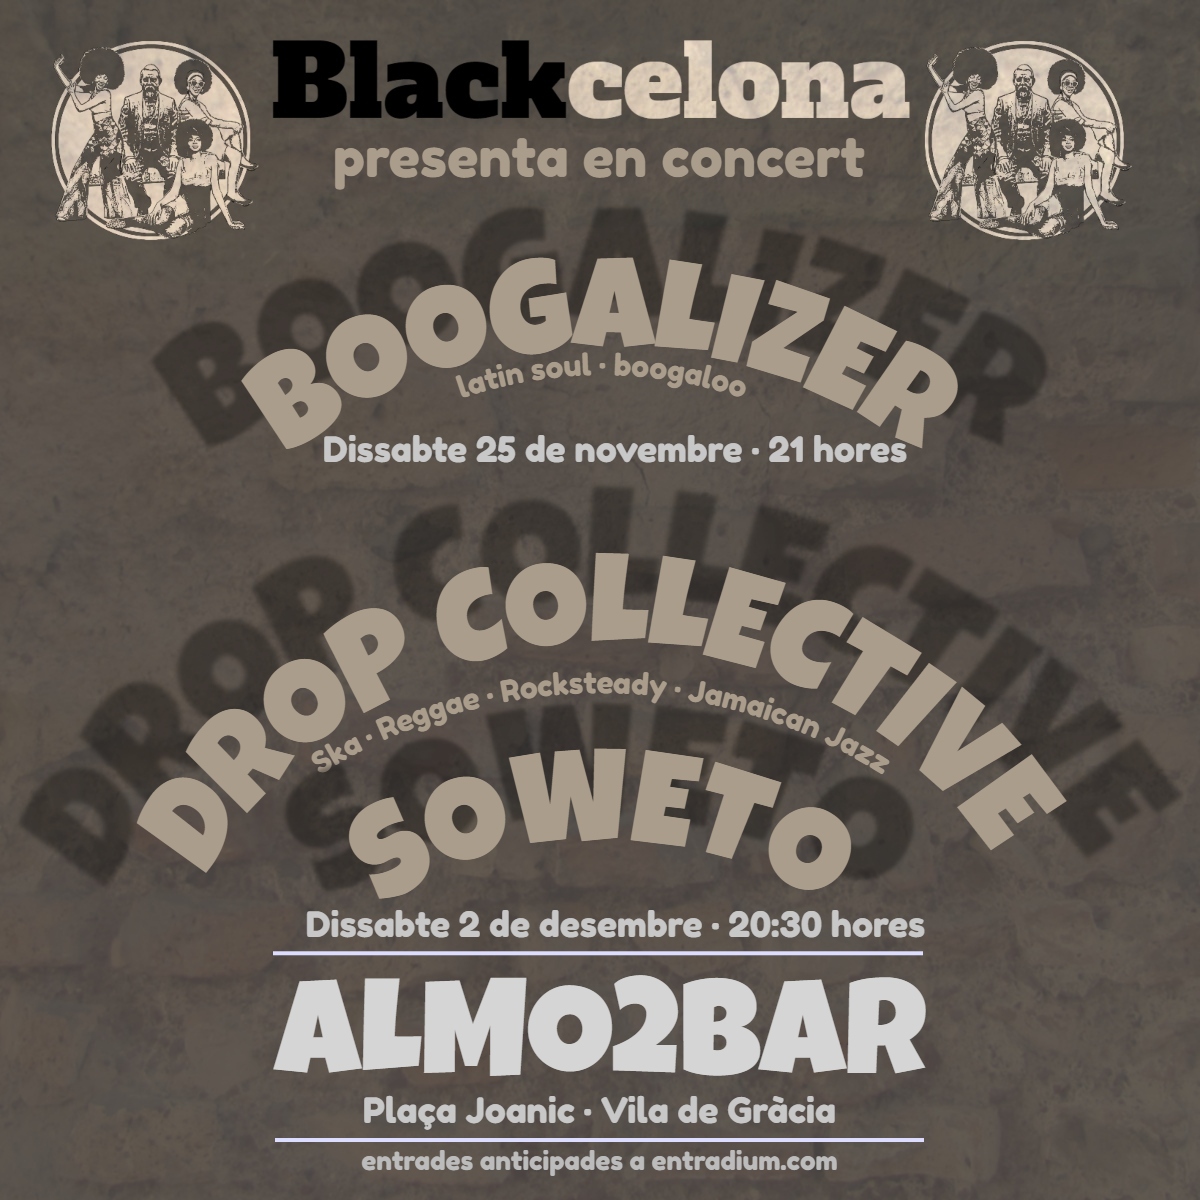 #Blackcelona presenta en concert al @Almo2bar > Dissabte 25/11 >> #Boogalizer > Dissabte 2/12 >> @DropCoBCN + #Soweto Entrades anticipades a @entradium #boogaloo #latinsoul #ska #reggae #rocksteady #jamaicanjazz #musicaviva #viladegracia